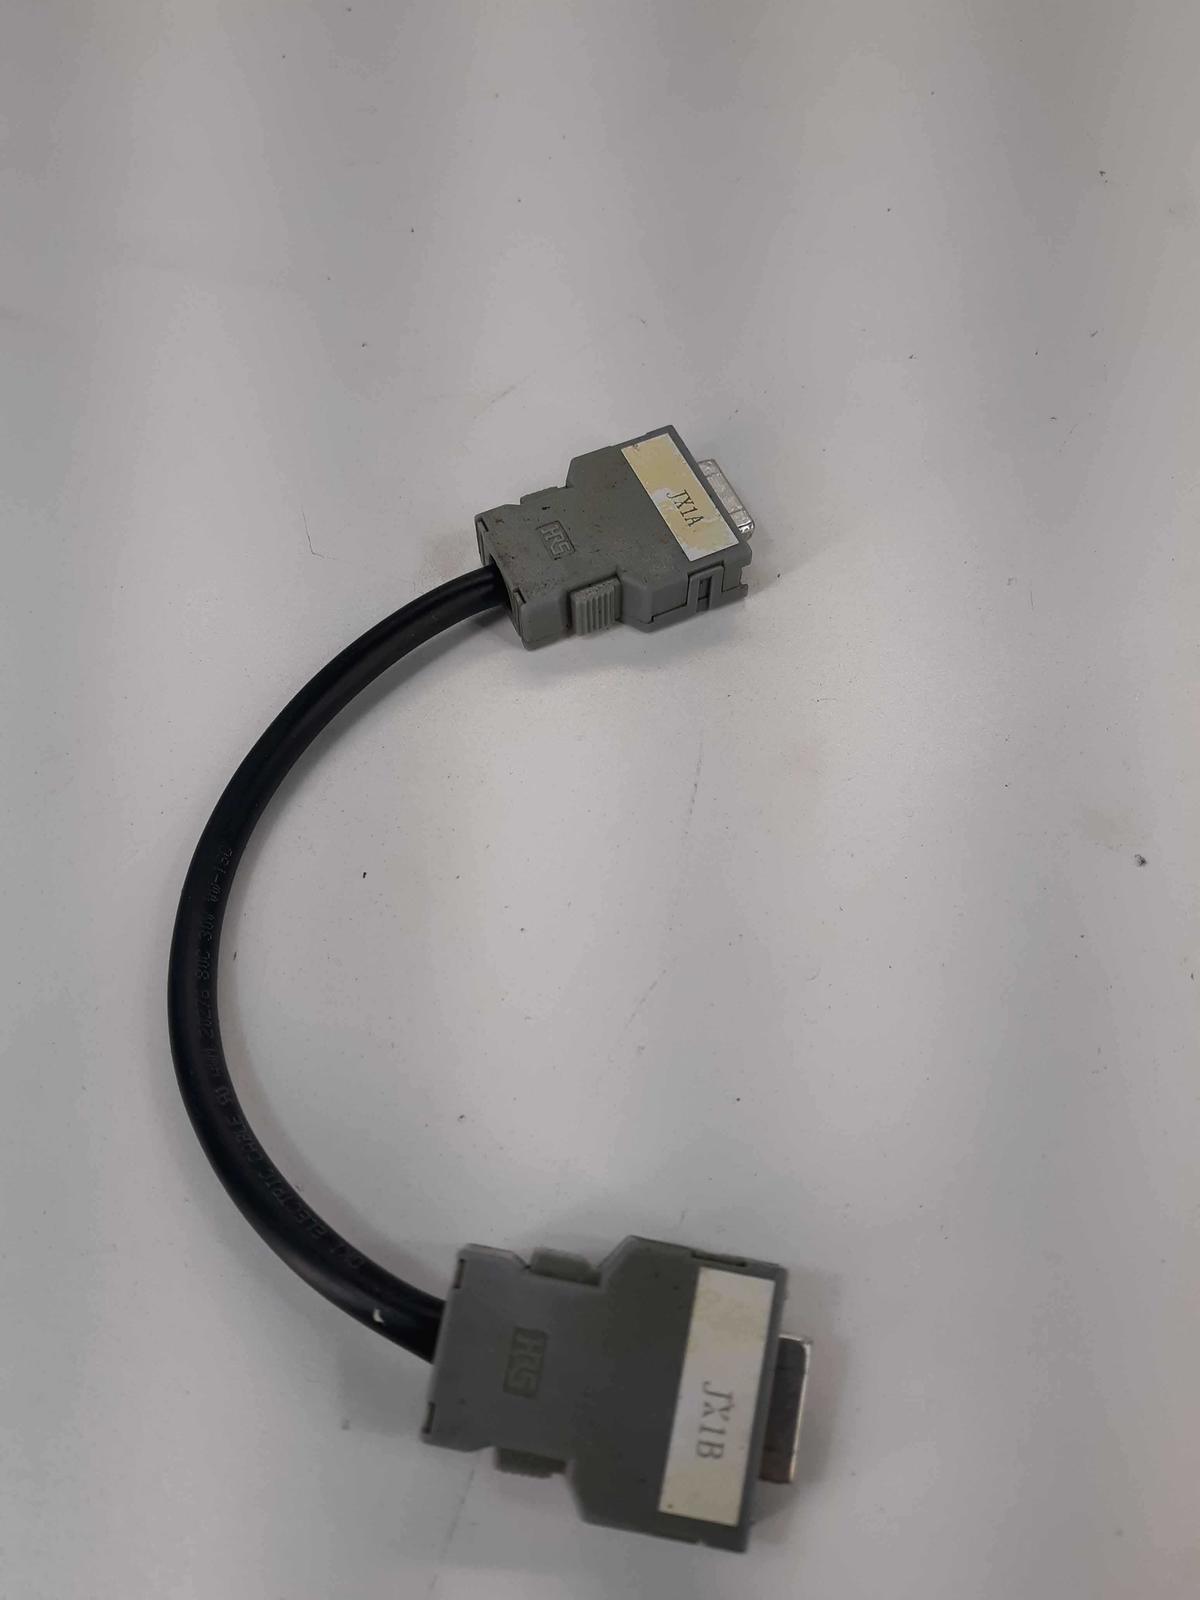  Fanuc Connector Cable, A660-2042-T074, JX1A / JX1B  - $35.00